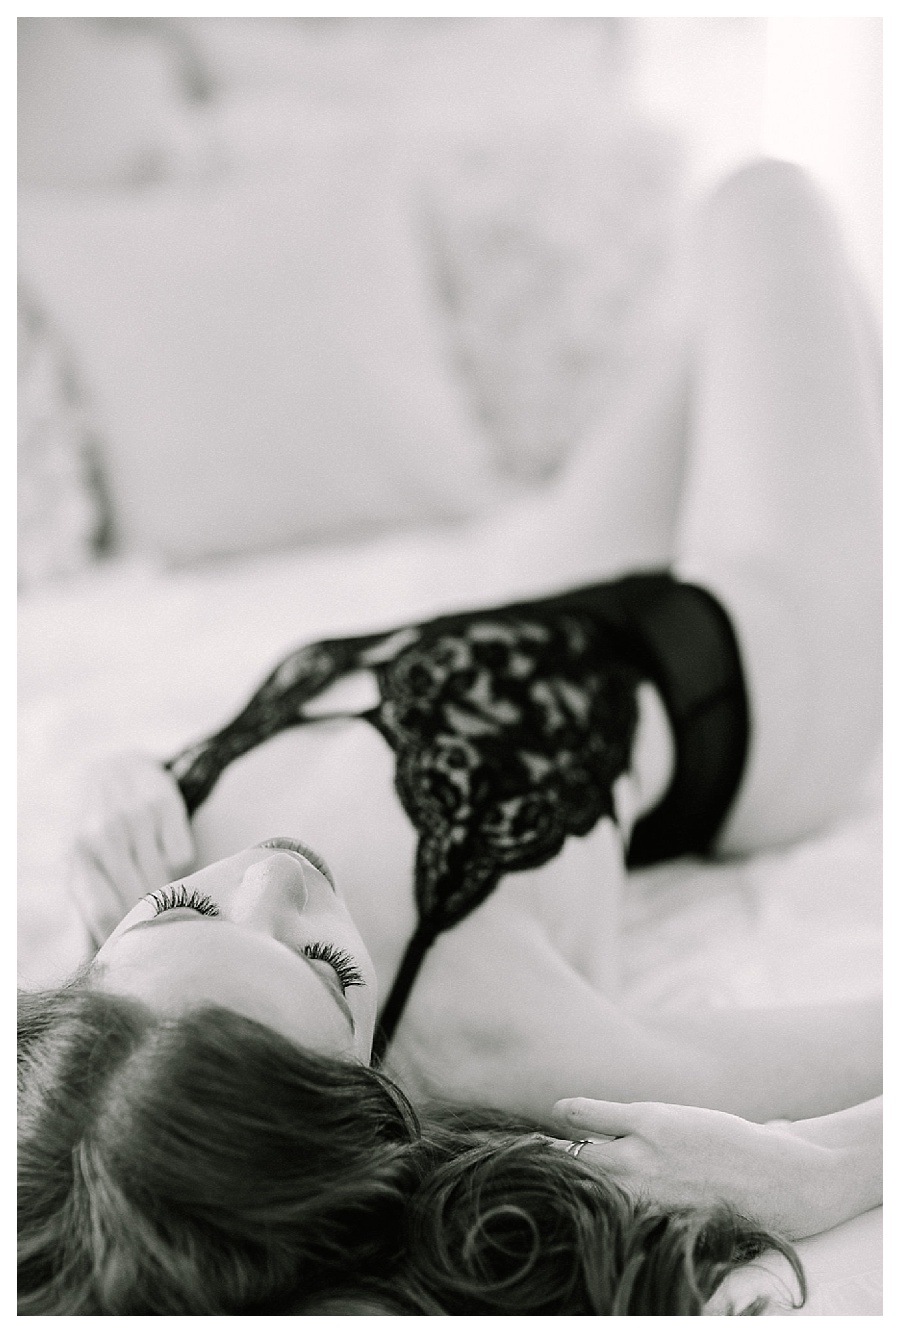 styled boudoir photo shoot at the loft natural light photo studio for rent in santa clara, ca_0062.jpg